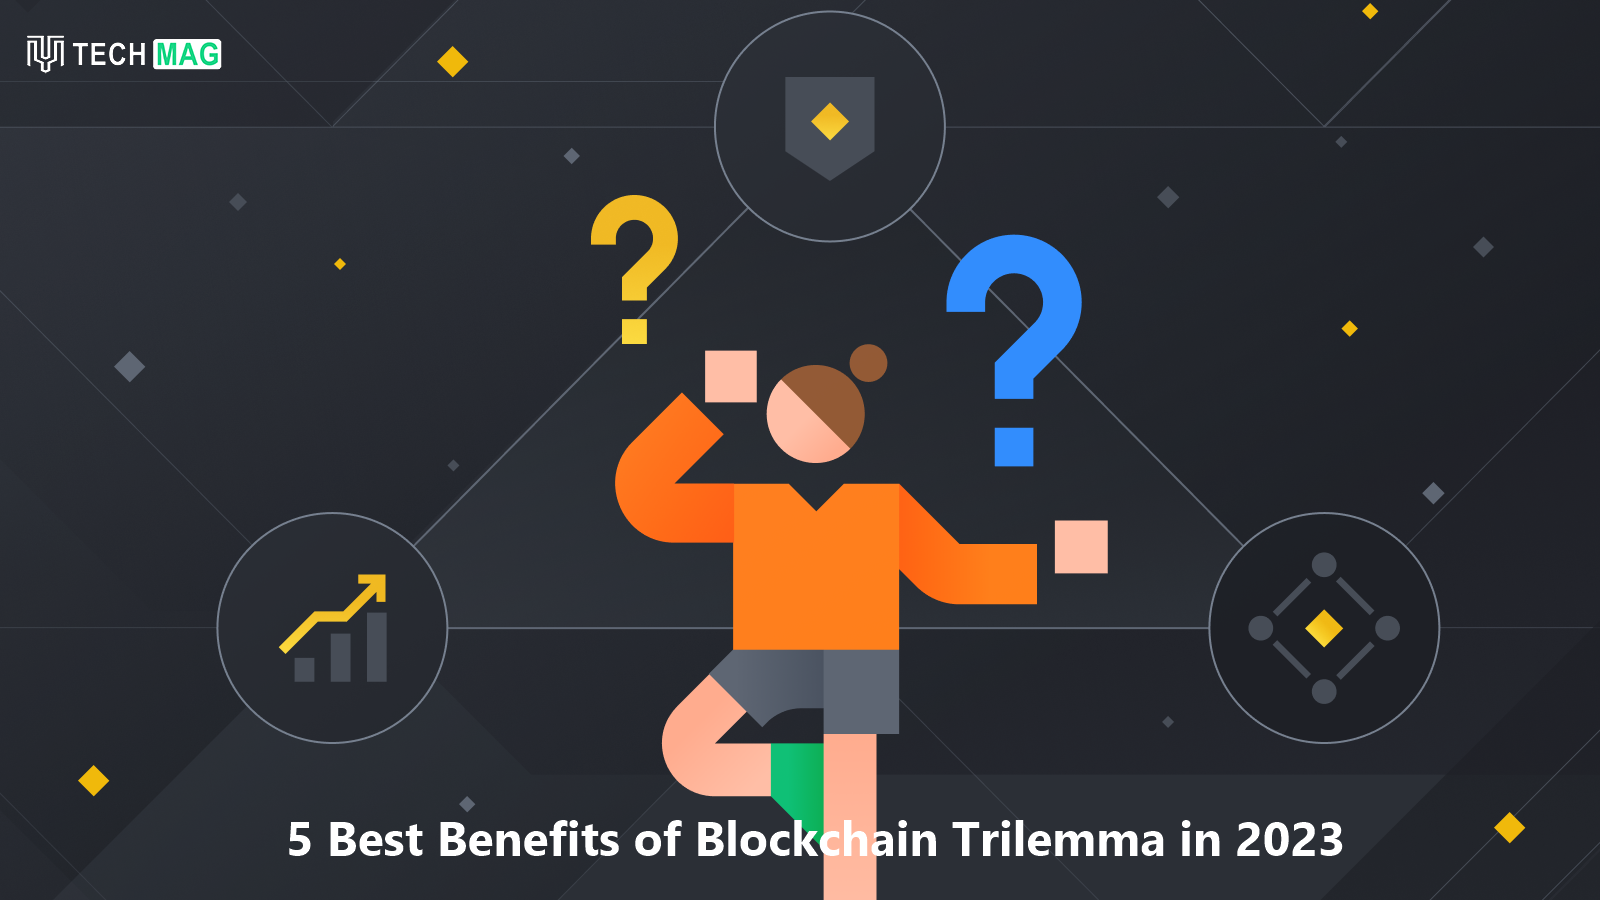 5 Best Benefits of Blockchain Trilemma in 2023